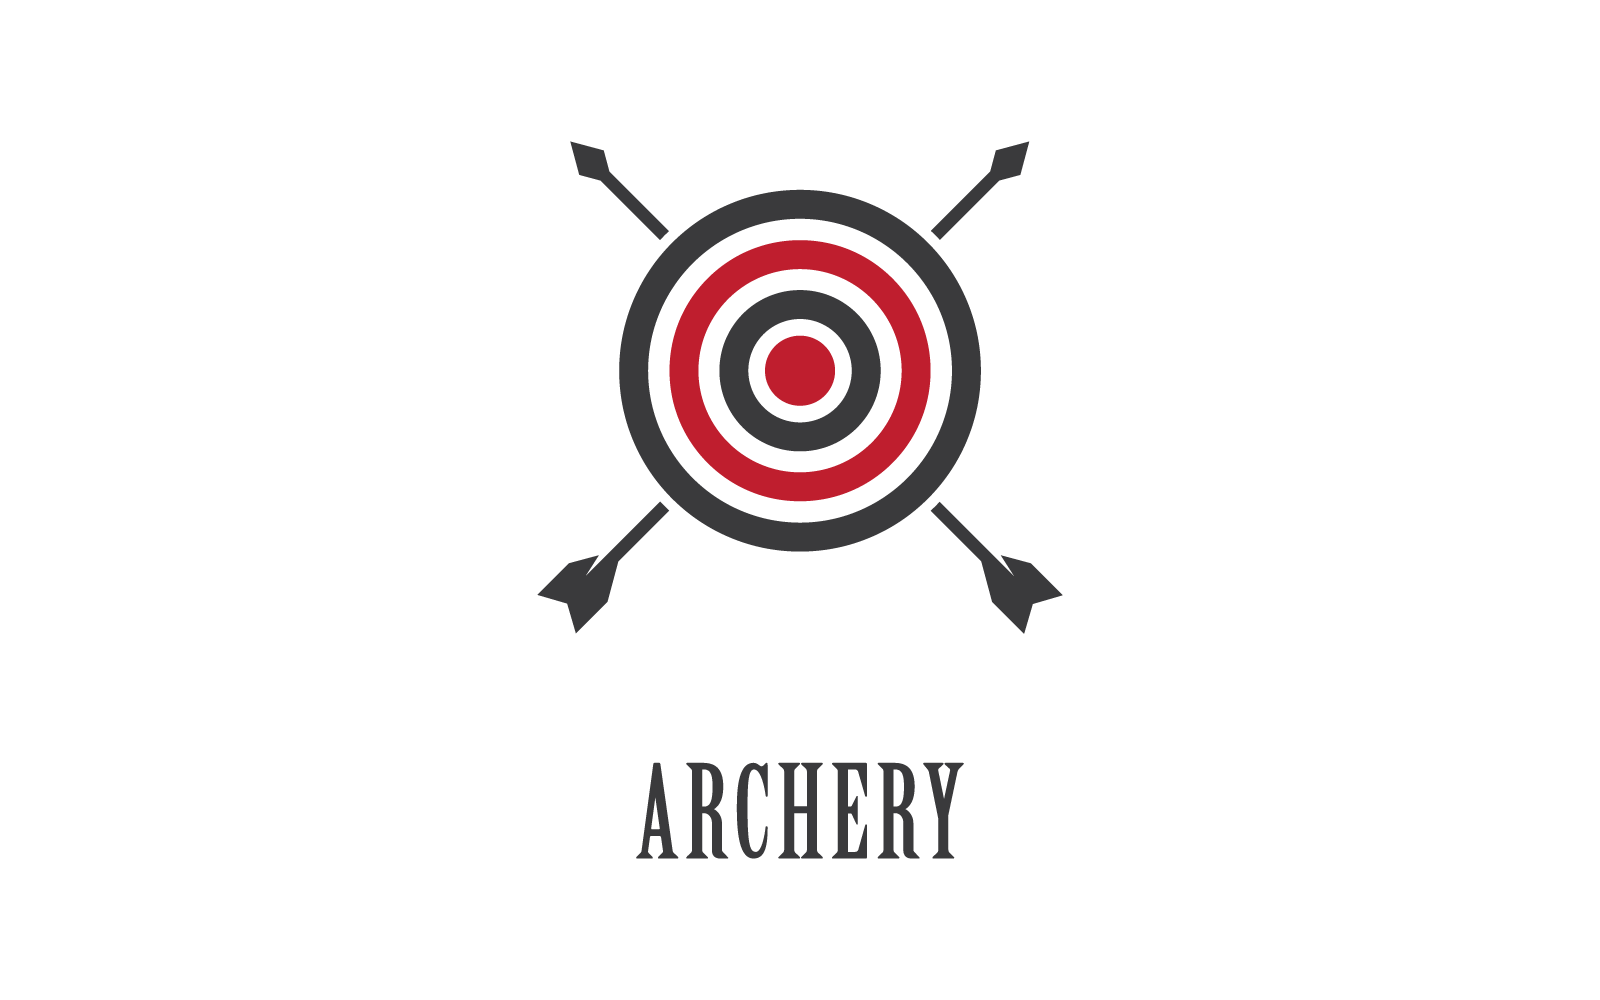 Archery logo illustration flat design